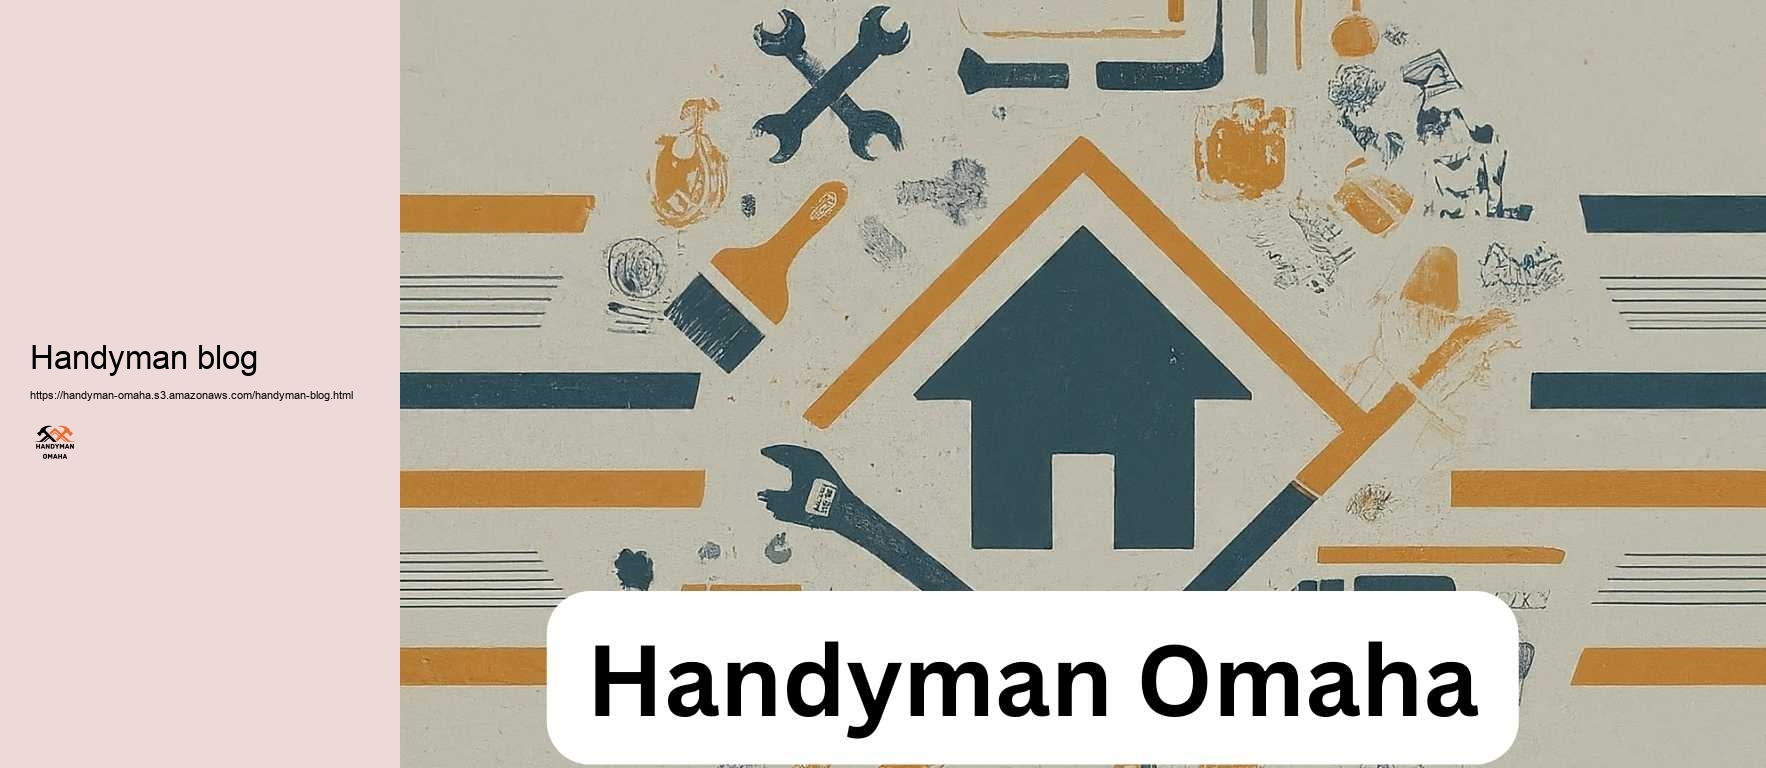 Handyman blog